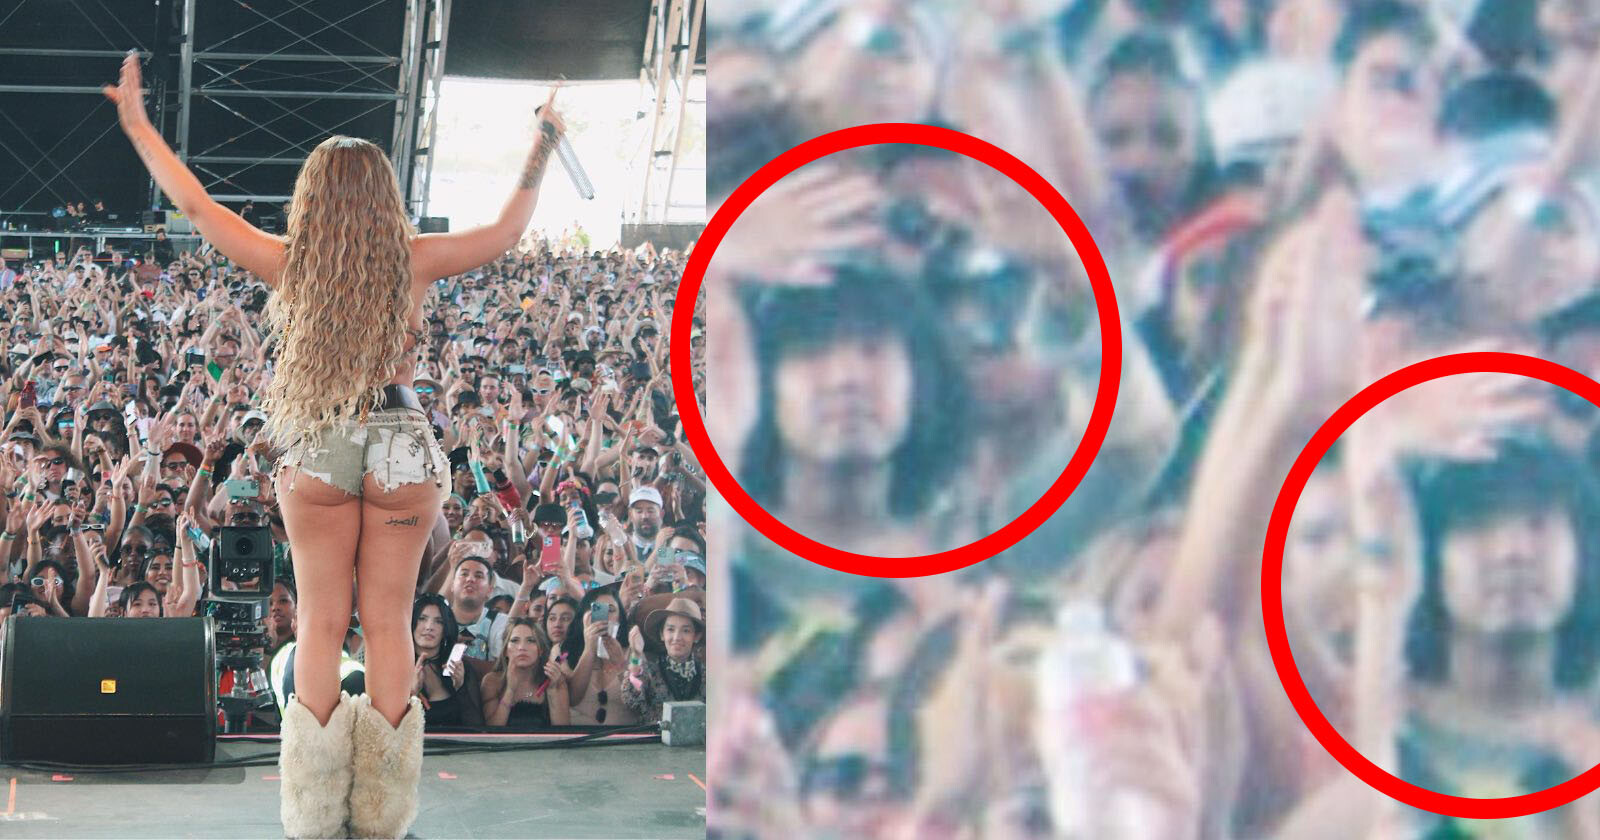  rapper latto denies photoshopping coachella photo make crowd 